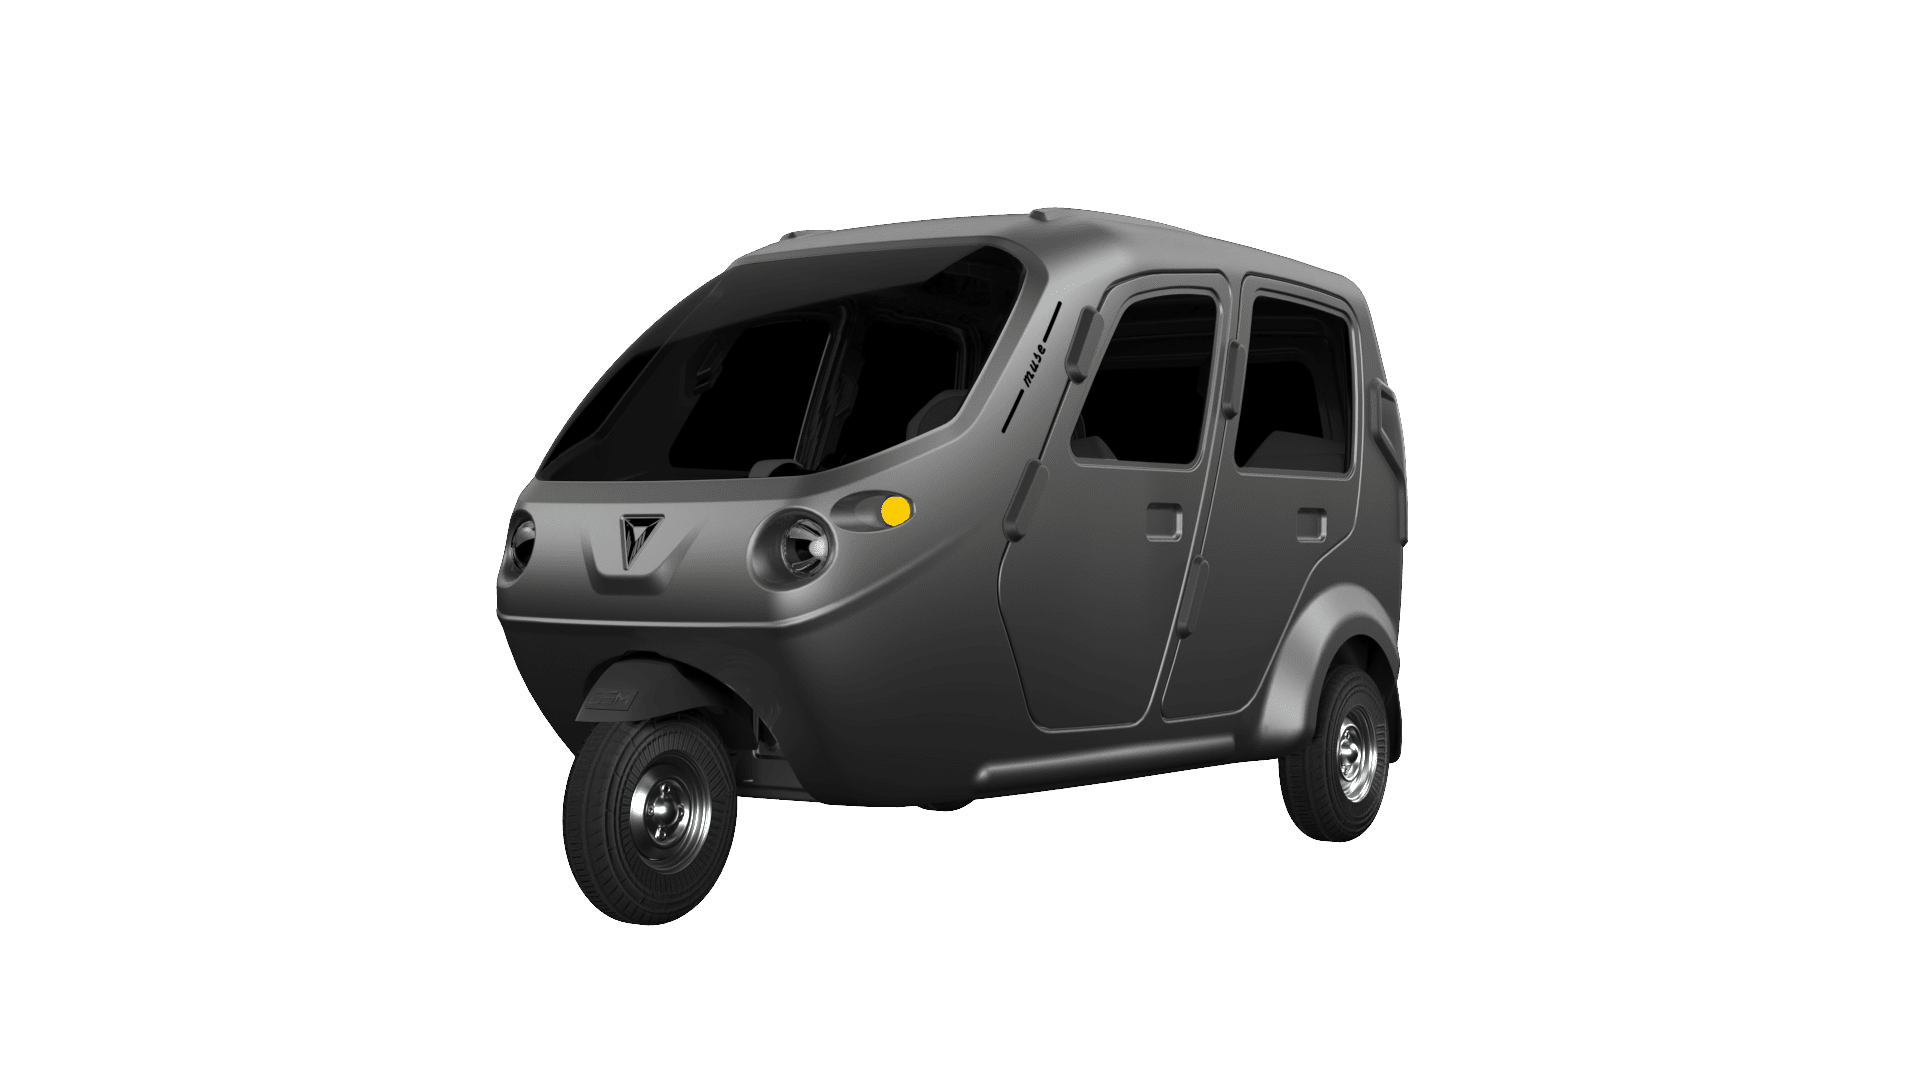 Micro EVs 2023-2043: Electric Two-Wheelers, Three-Wheelers, and